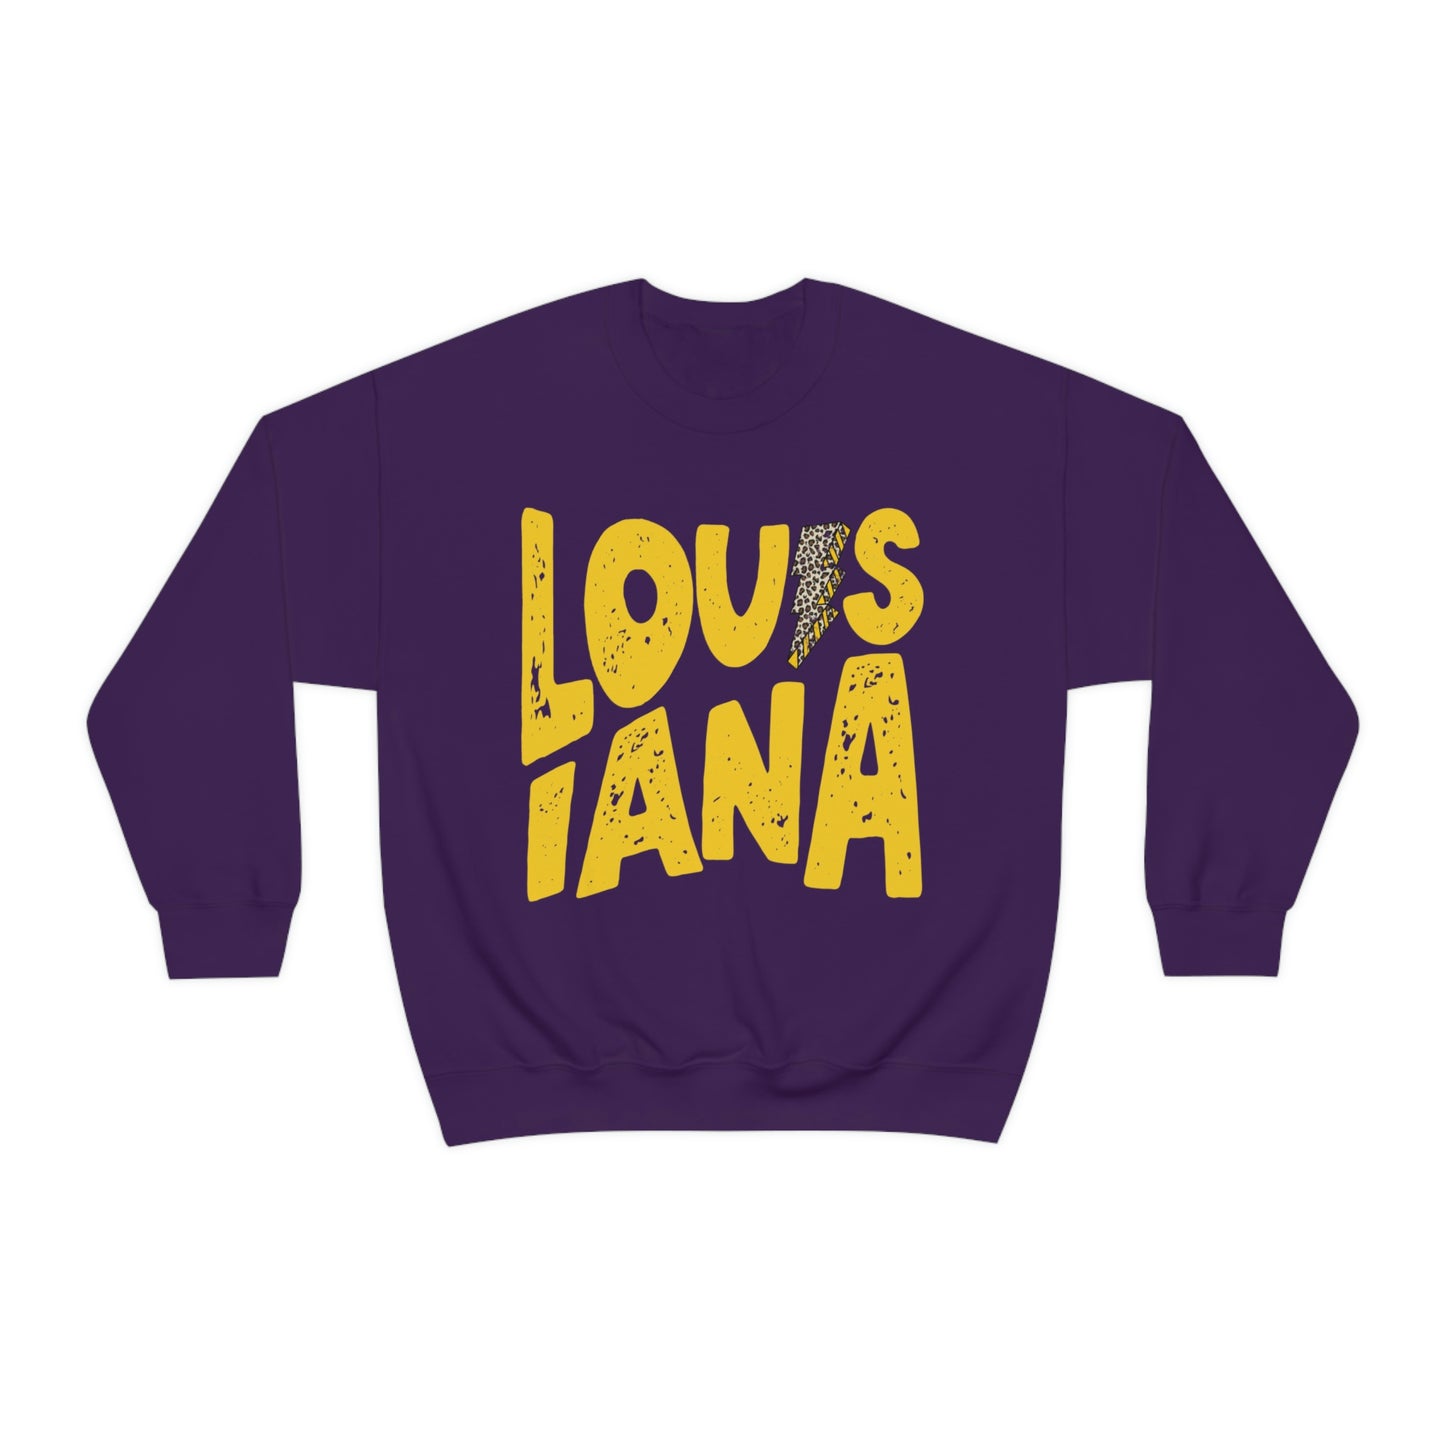 Louisiana Lightning Bolt Sweatshirt